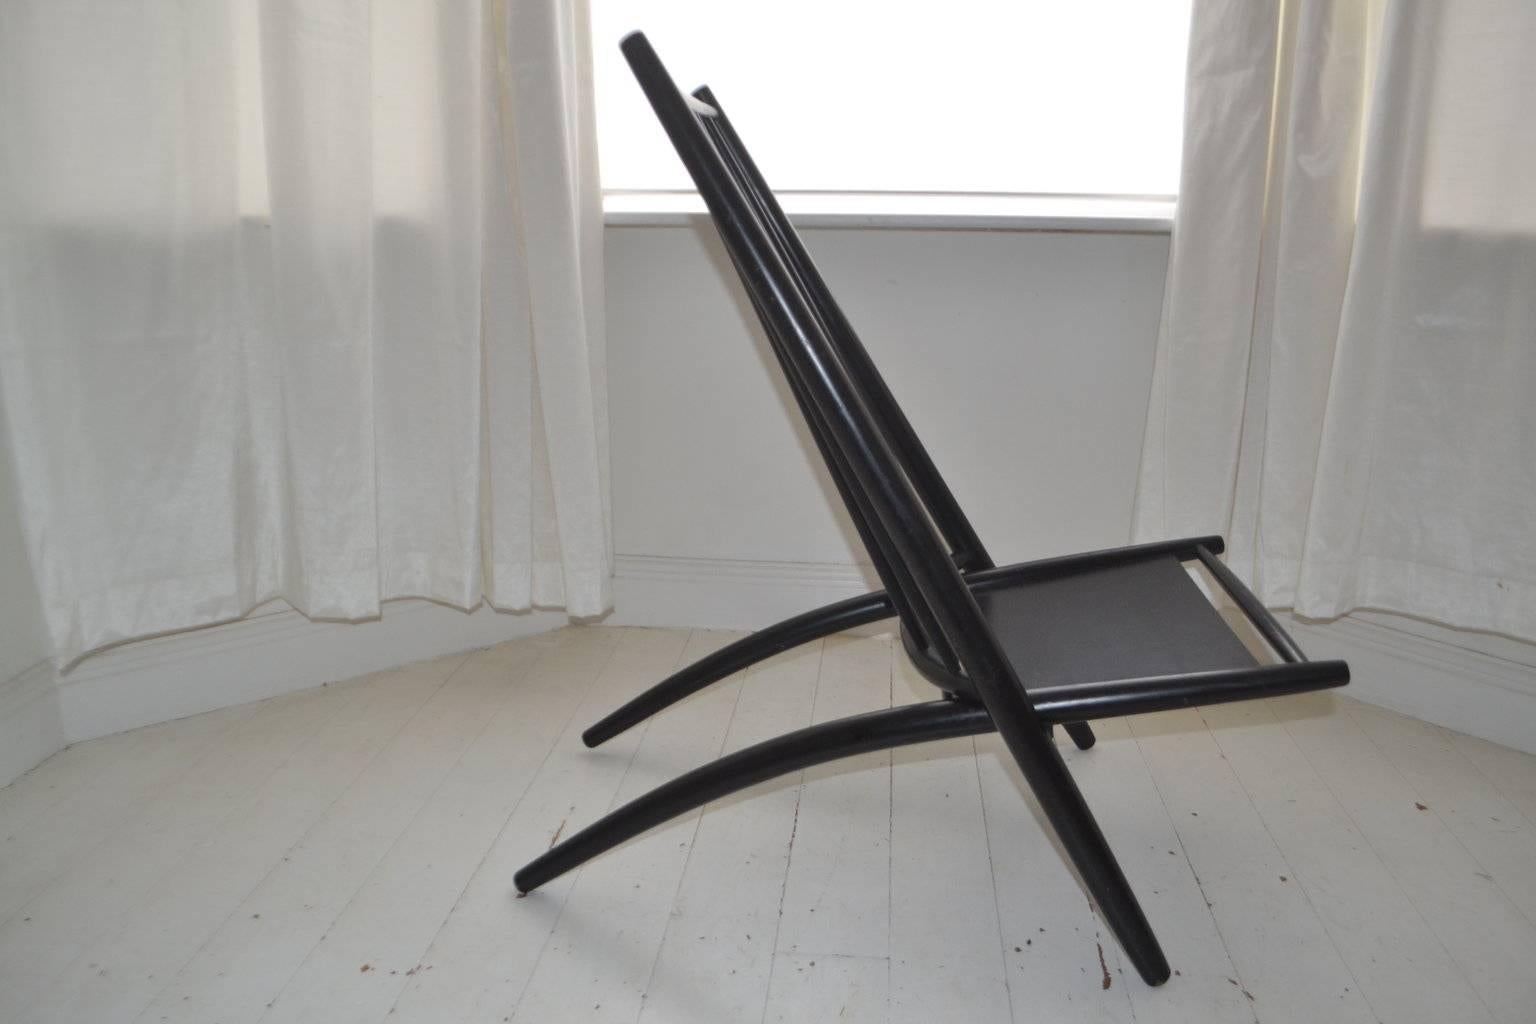 Rare Kongo chair designed by Alf Svensson for Bra Bohag / Hagafors, Sweden in 1954.